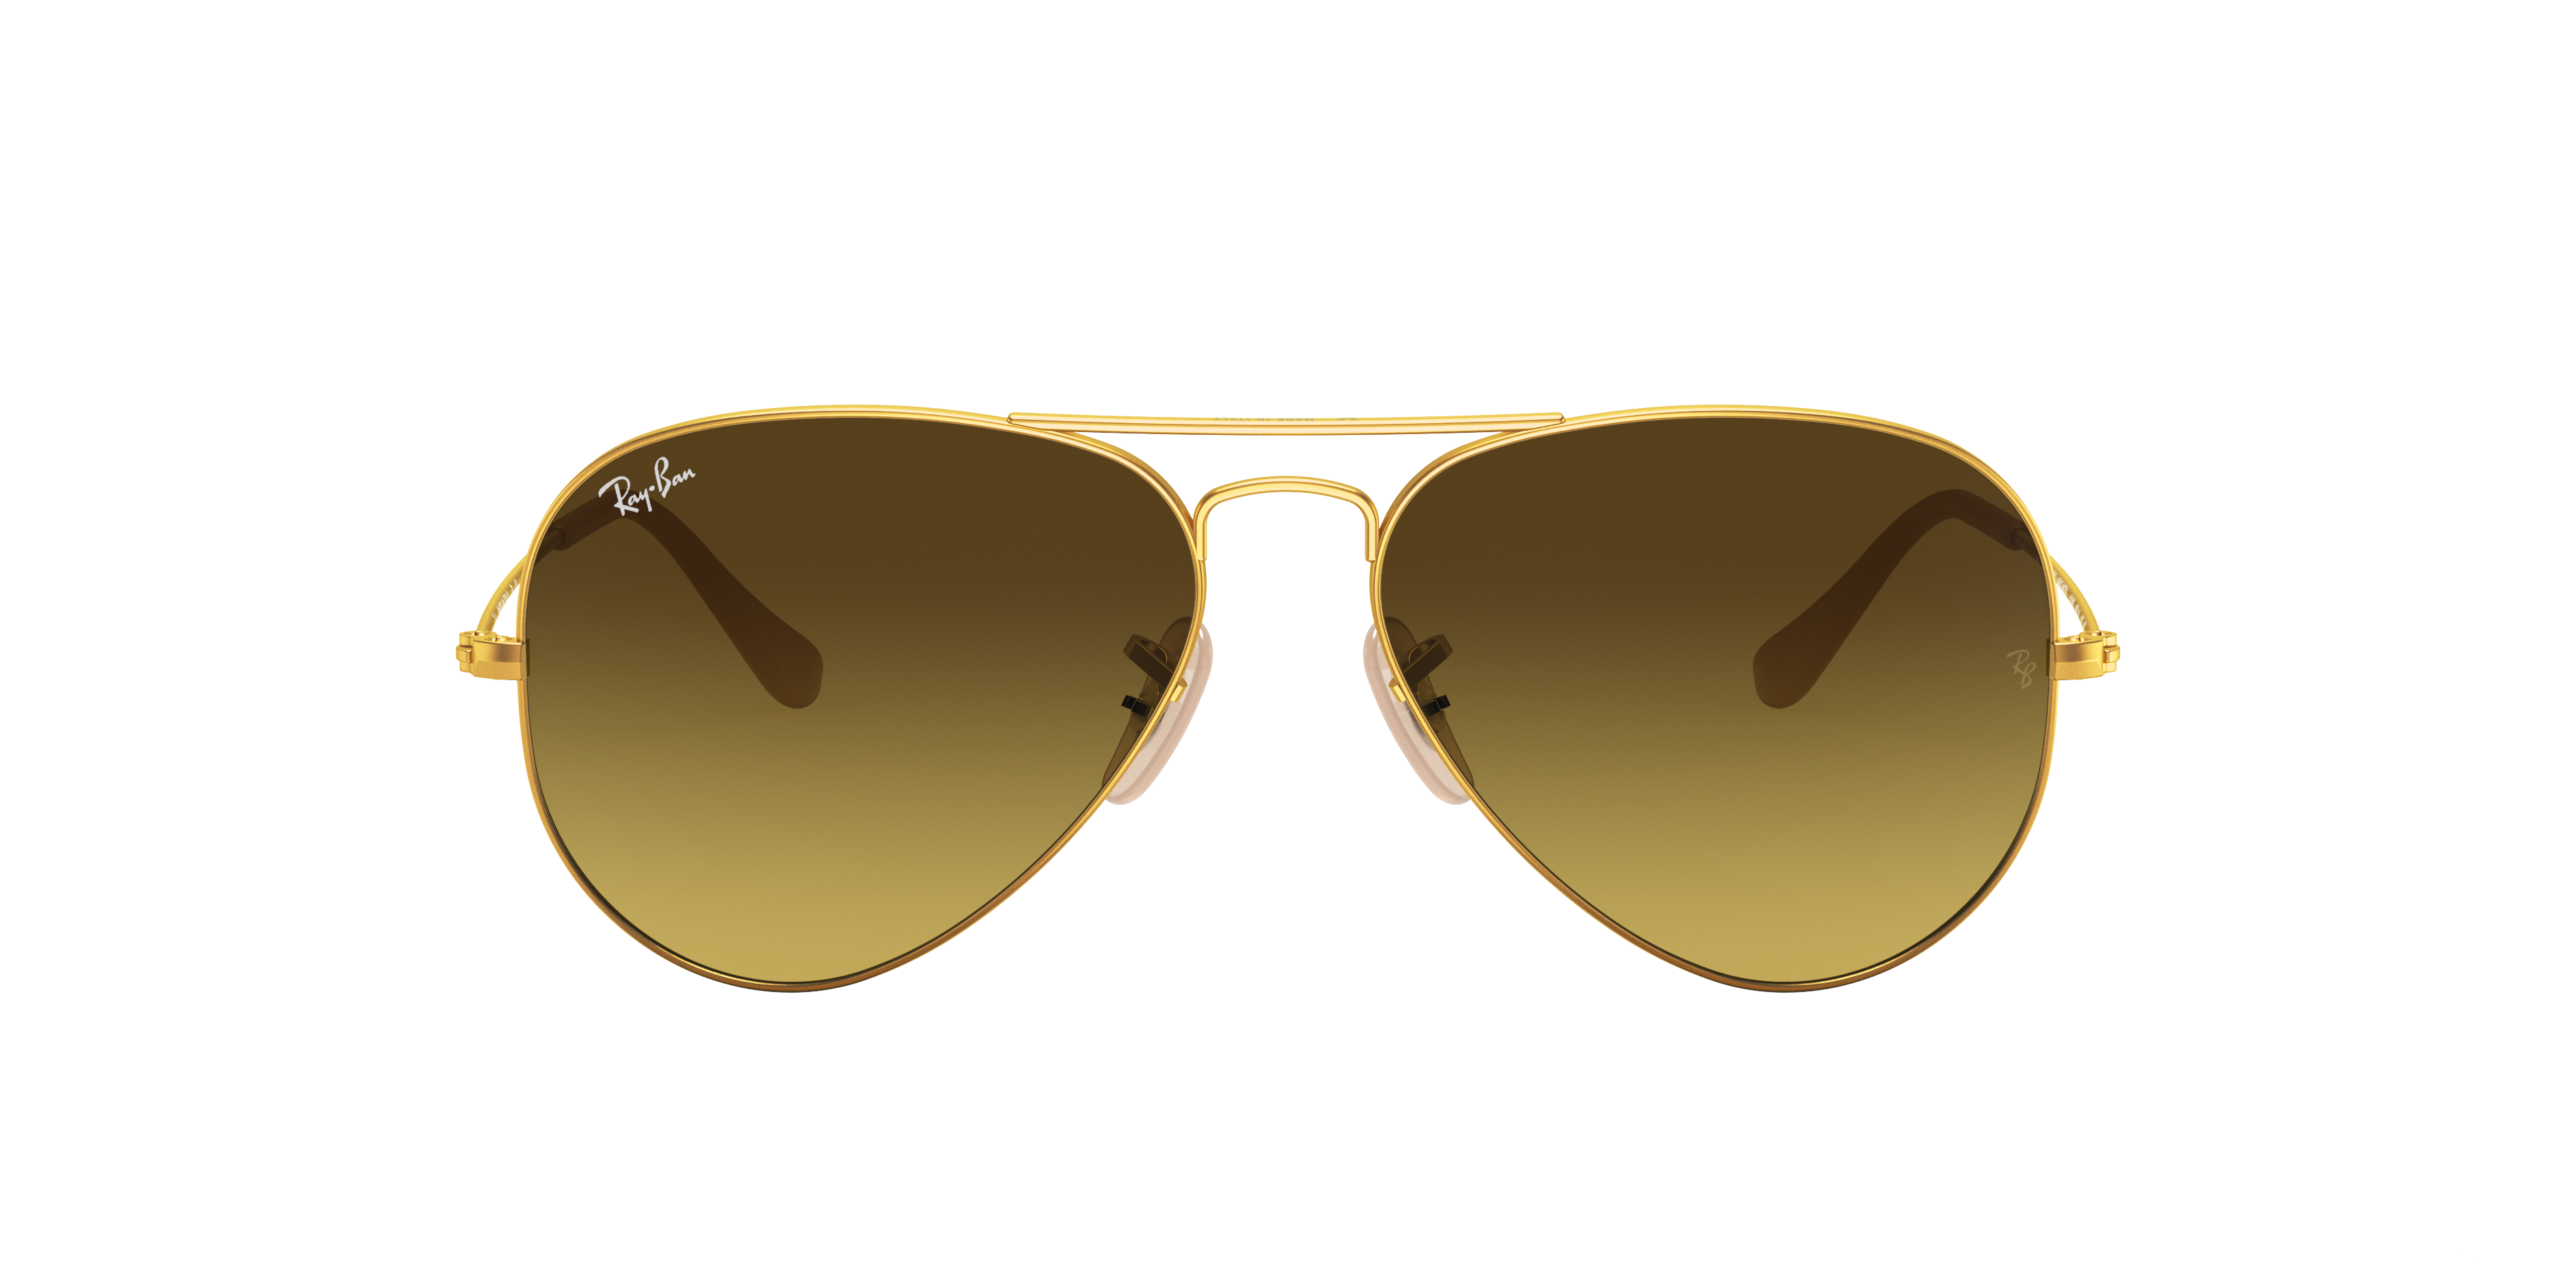 Buy Equal Brown Color Sunglasses Aviator Shape Full Rim Gold Frame Online